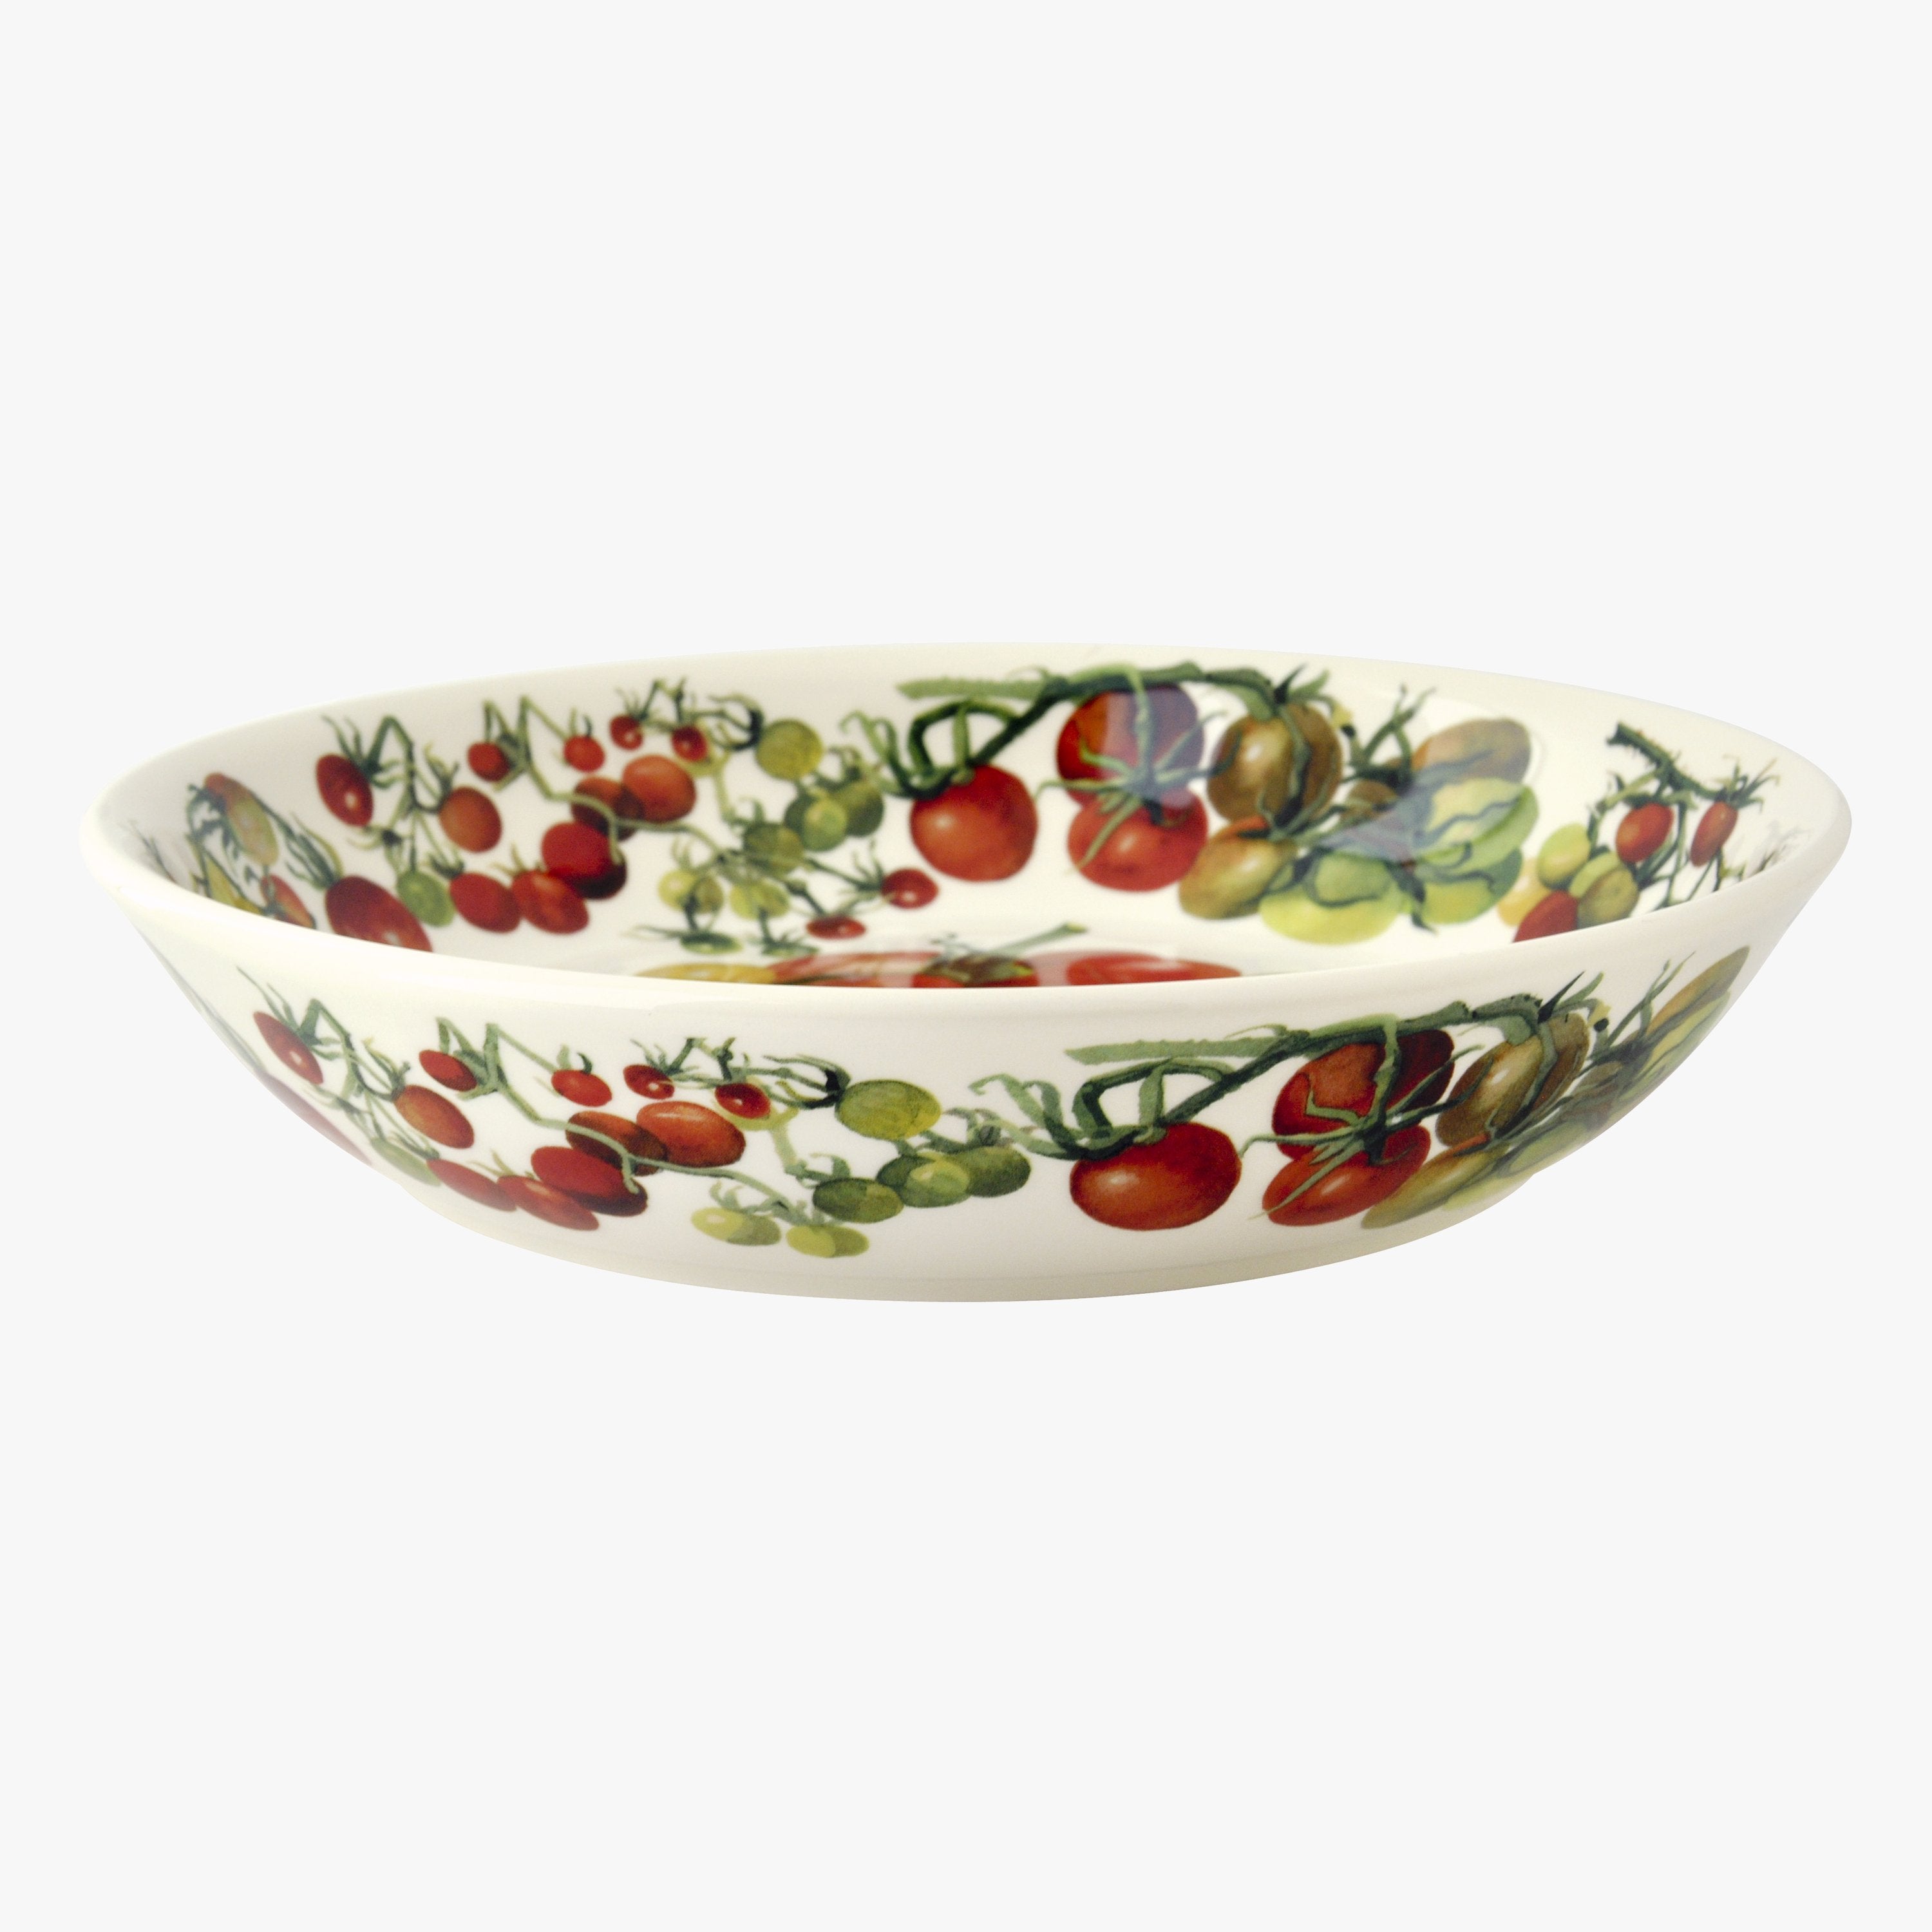 Vegetable Garden Tomatoes Medium Pasta Bowl - Unique Handmade & Handpainted English Earthenware Deco